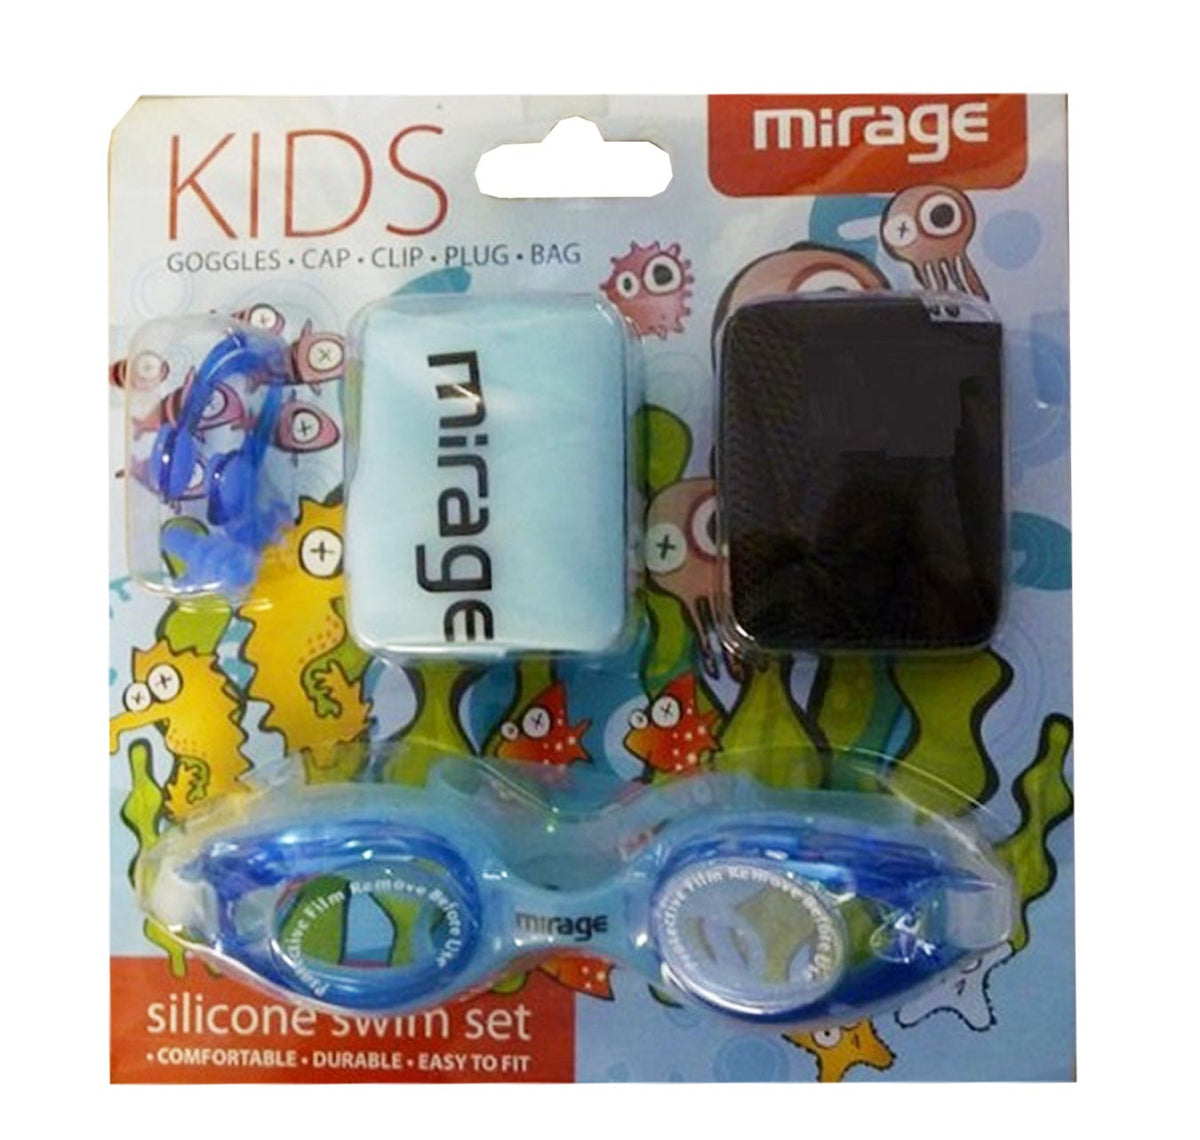 Mirage Kids Silicone Swim Set Blue